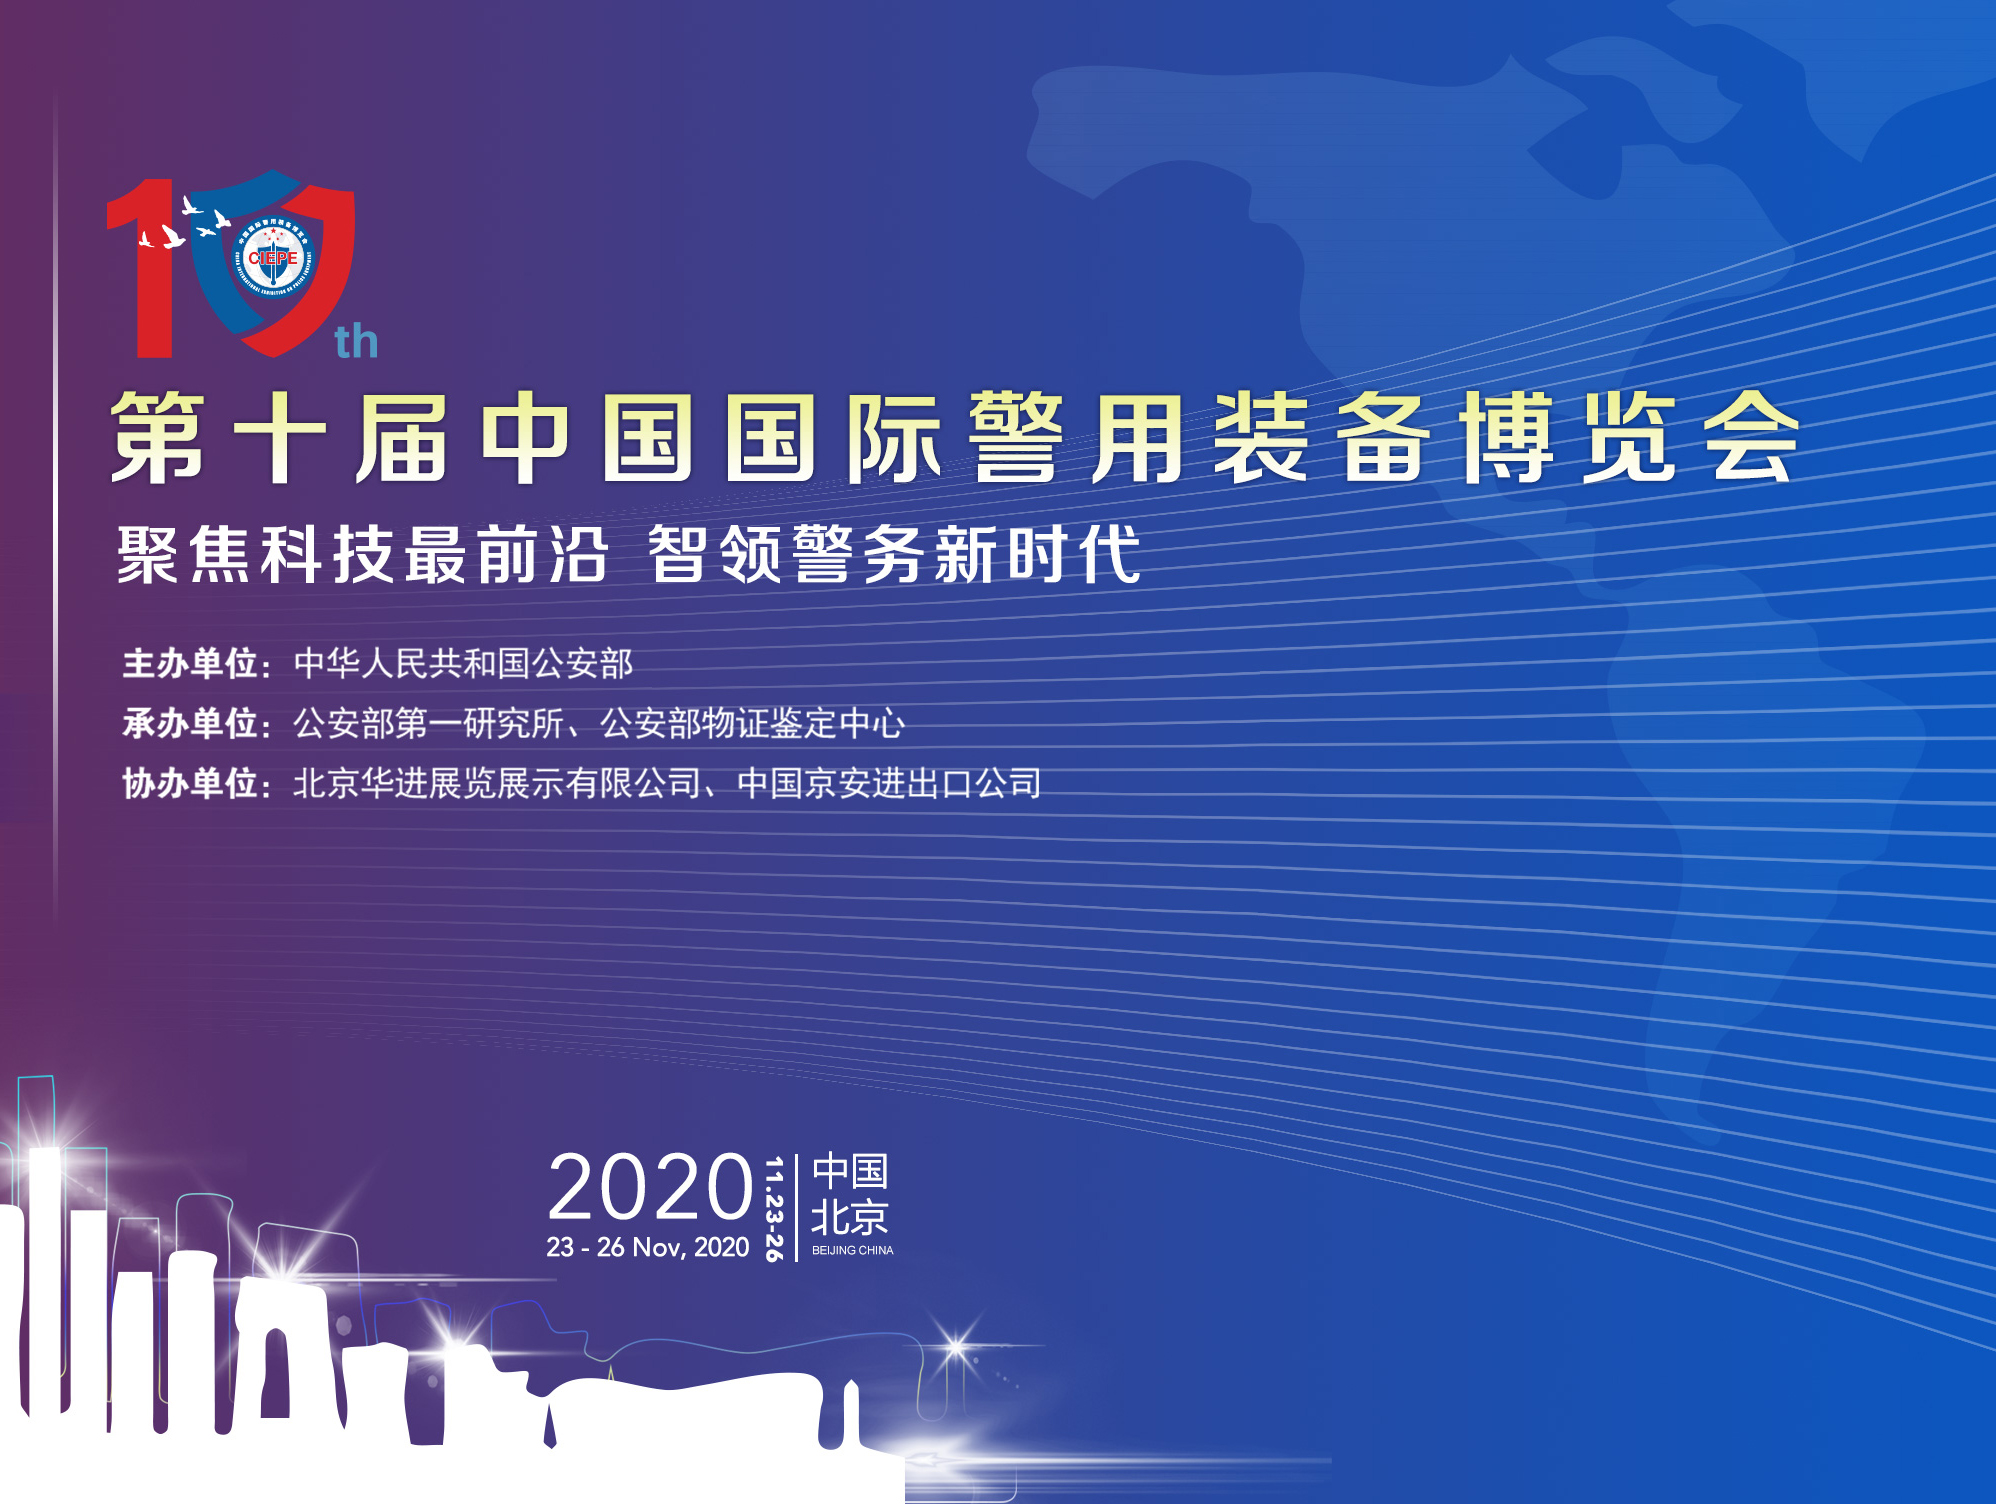 CTID平台即将亮相第十届中国国际警用装备博览会！